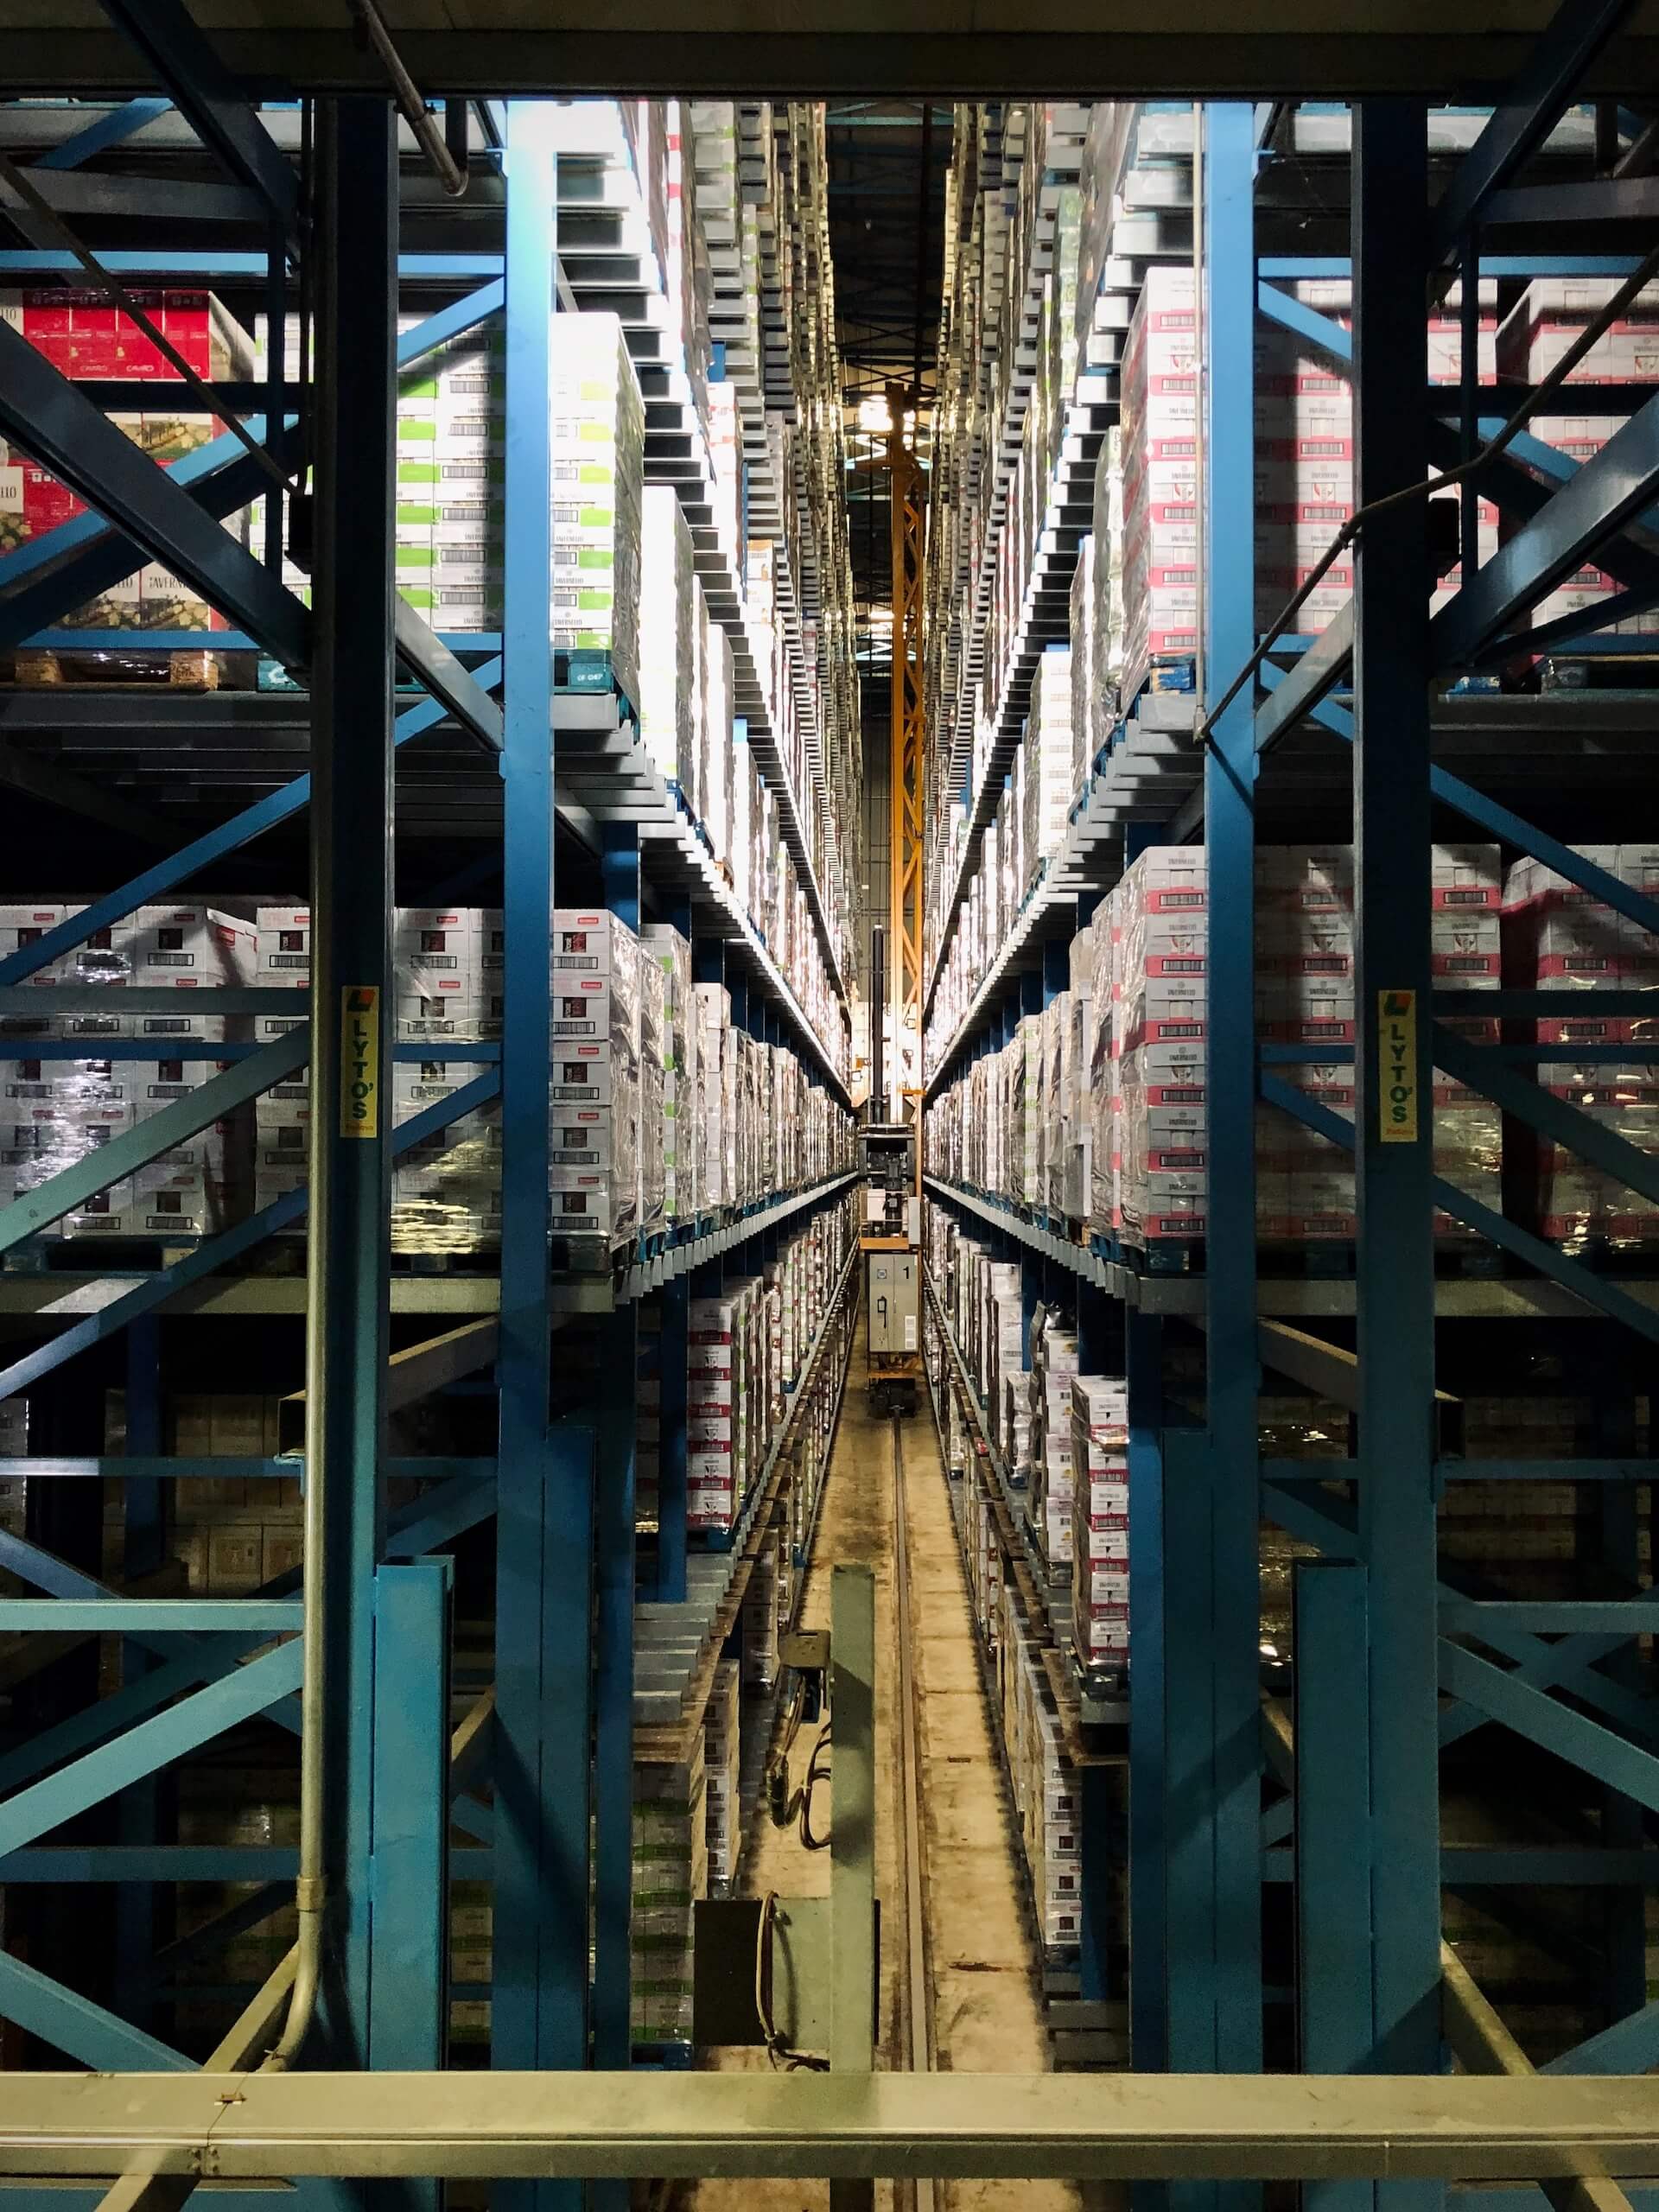 Inventory Management: Streamlining Logistics Within Warehouses